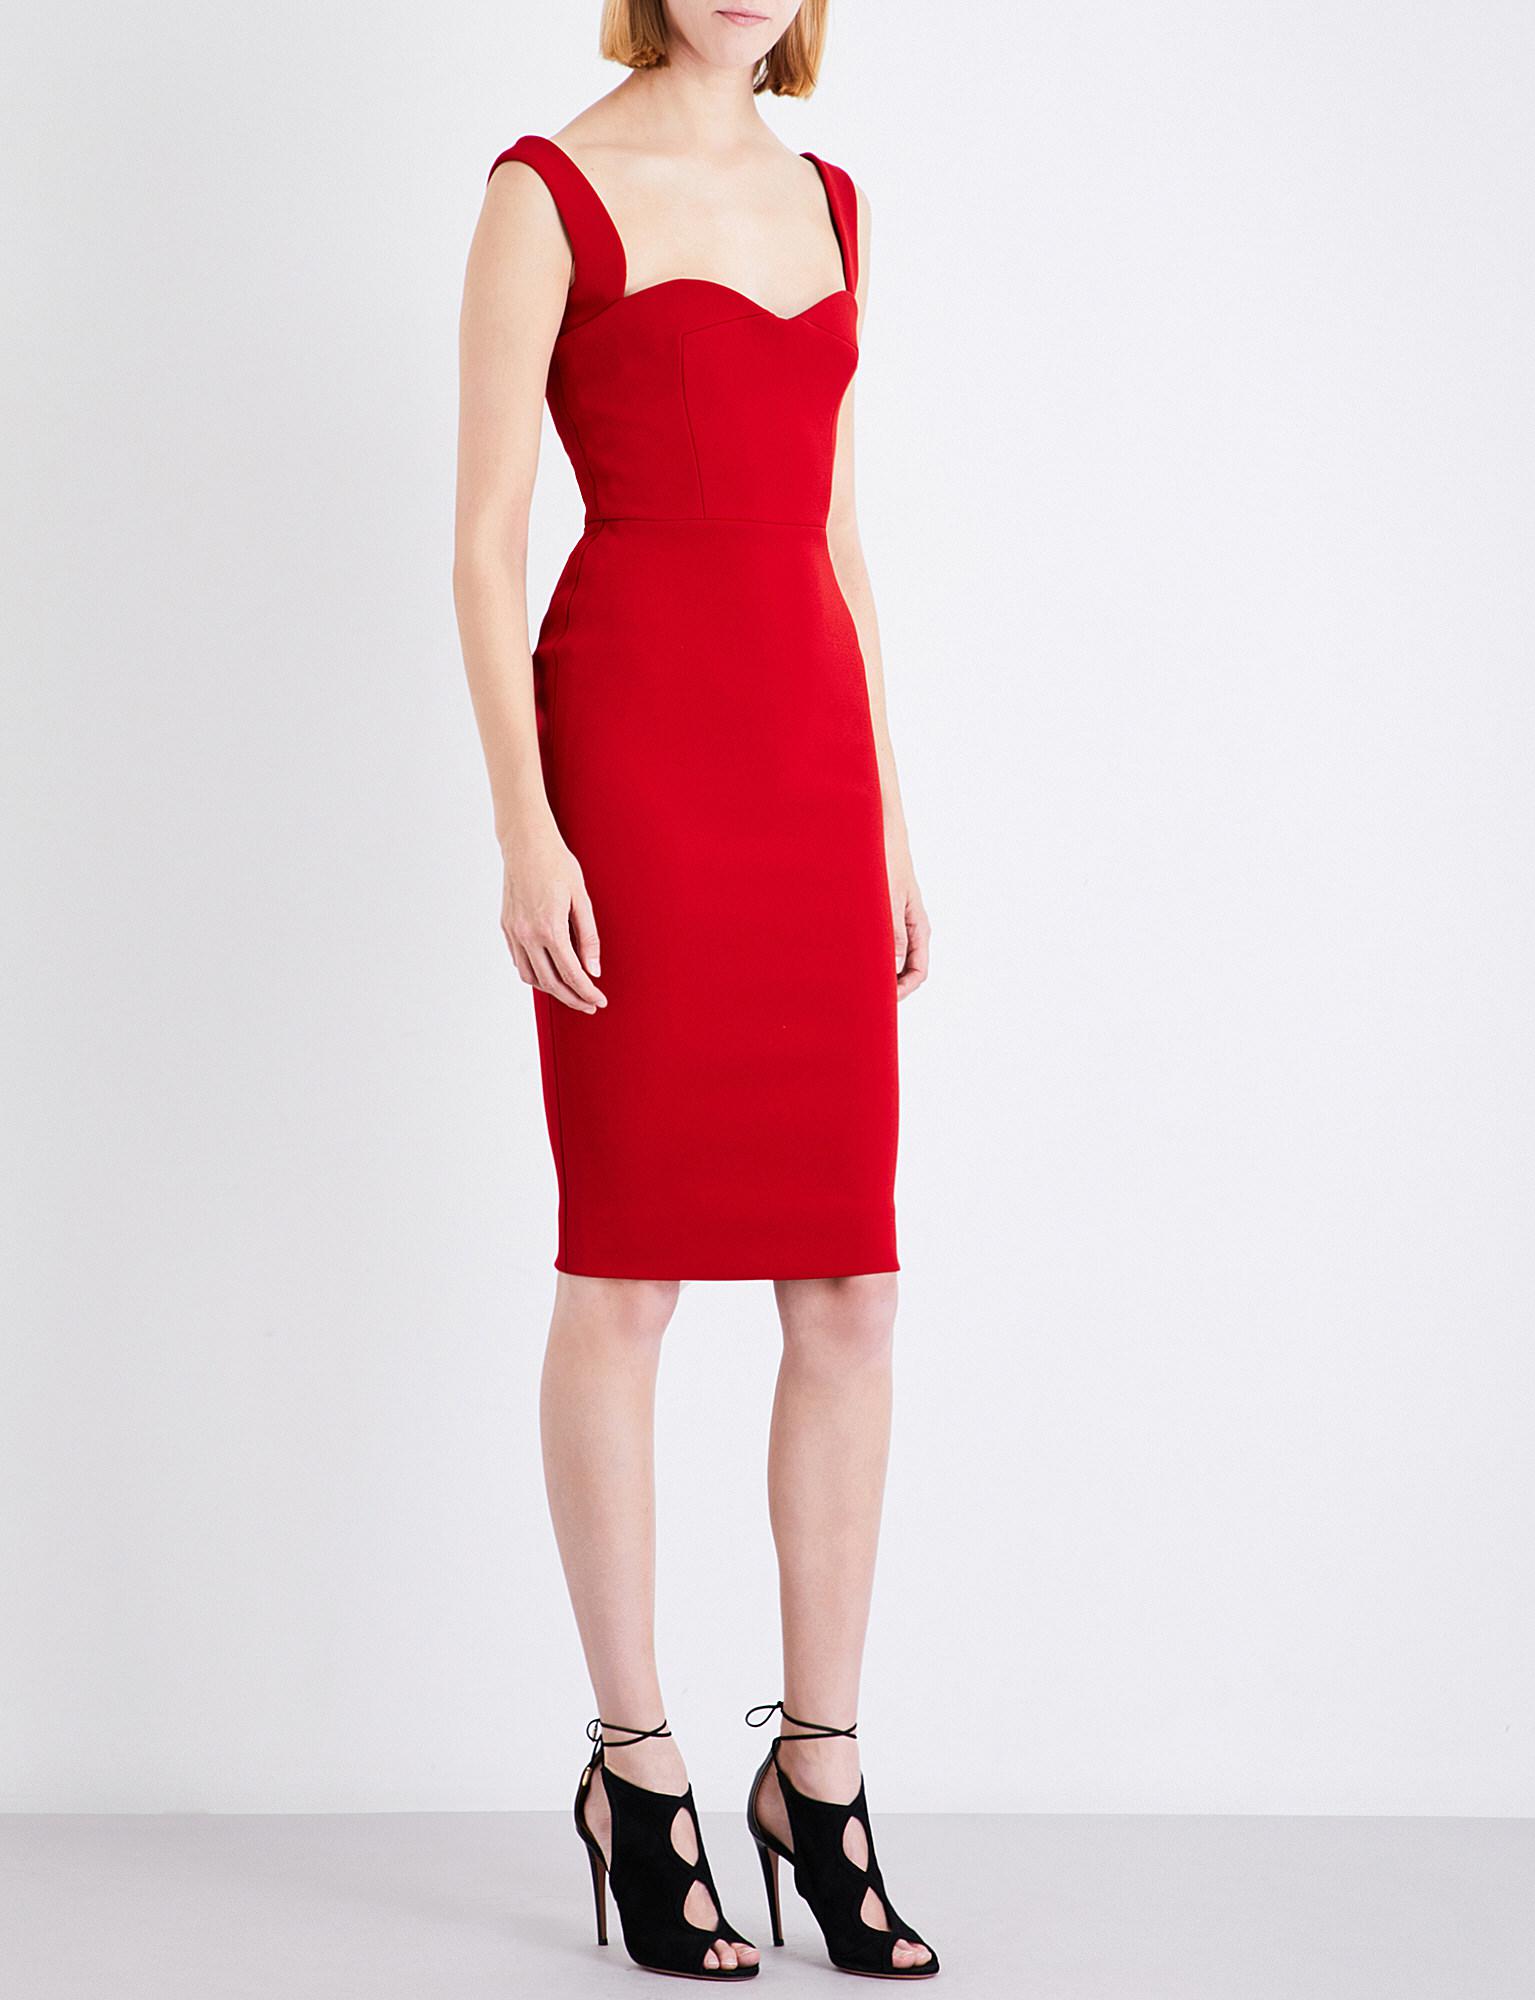 Red Knee Length Dress Victoria Beckham